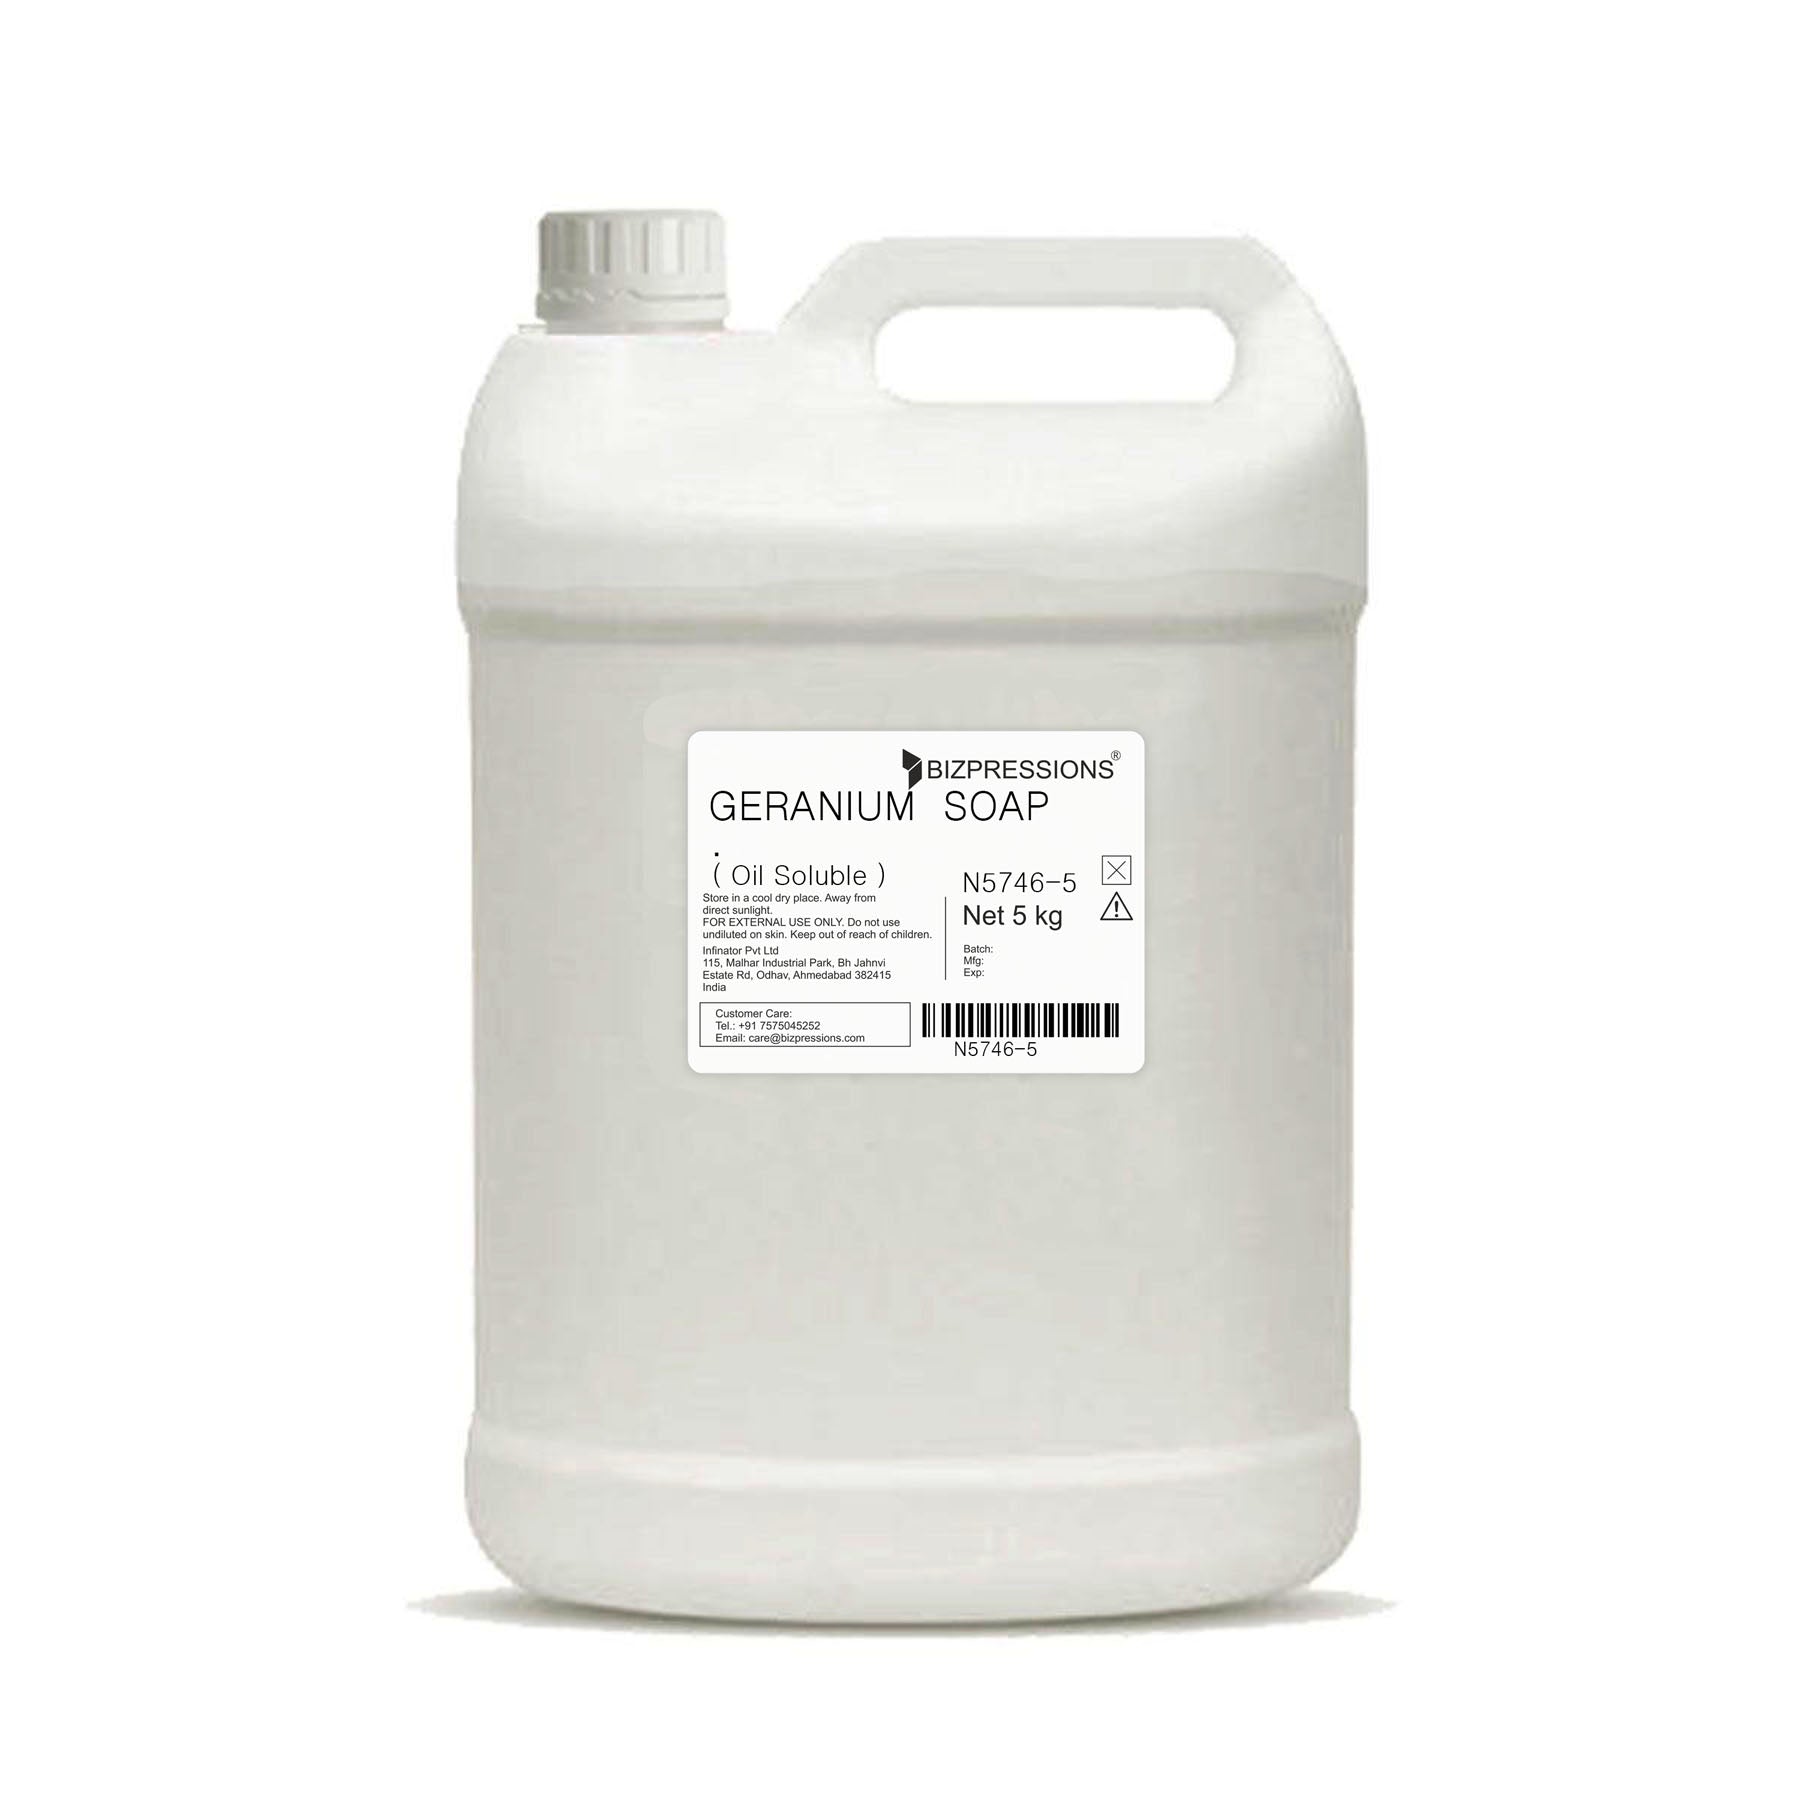 GERANIUM SOAP - Fragrance ( Oil Soluble ) - 5 kg